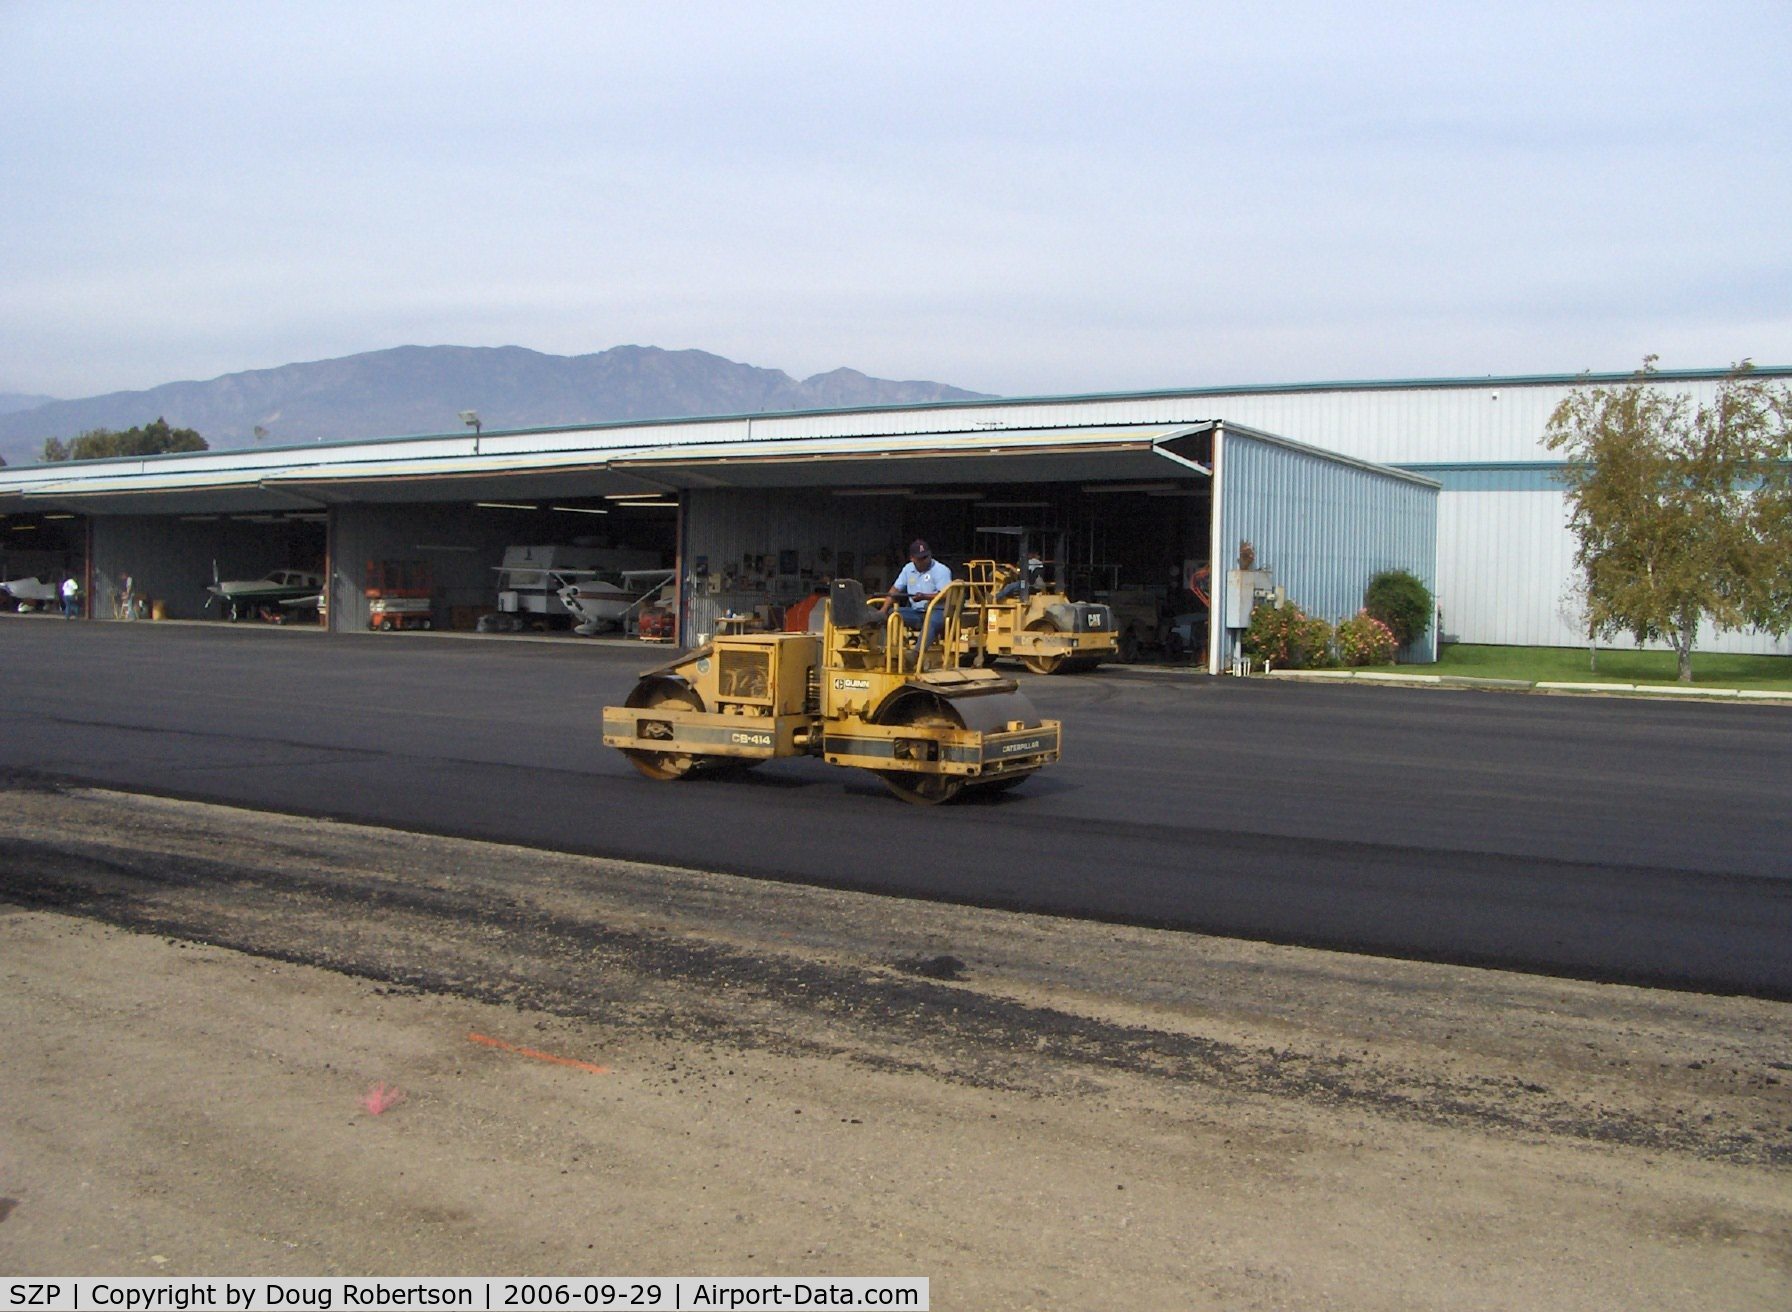 Santa Paula Airport (SZP) - Grading newly resurfaced asphalt aircraft ramp